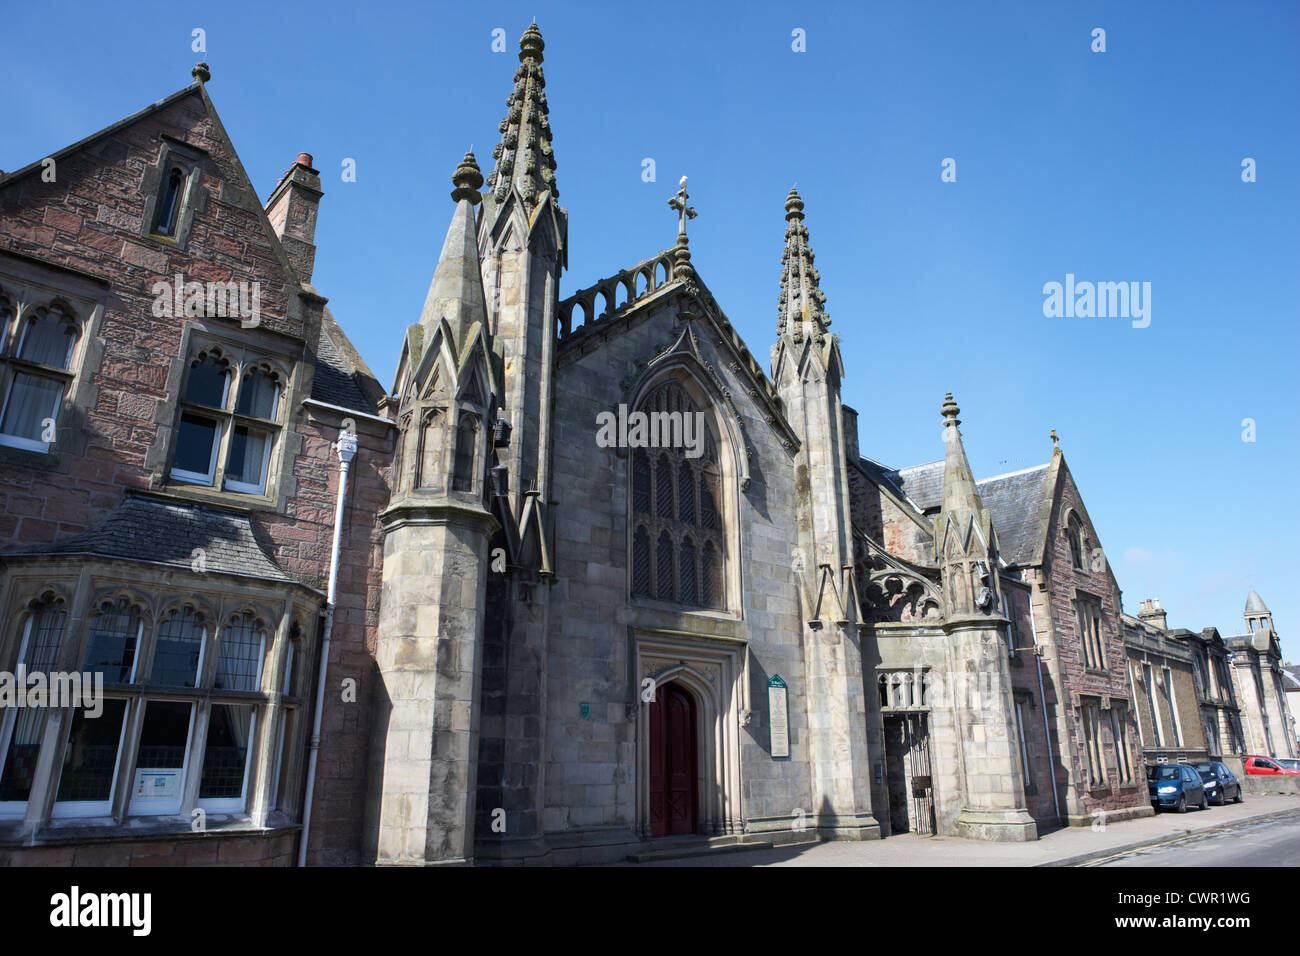 St Marys iglesia católica romana inverness highland Escocia uk Fotografía  de stock - Alamy